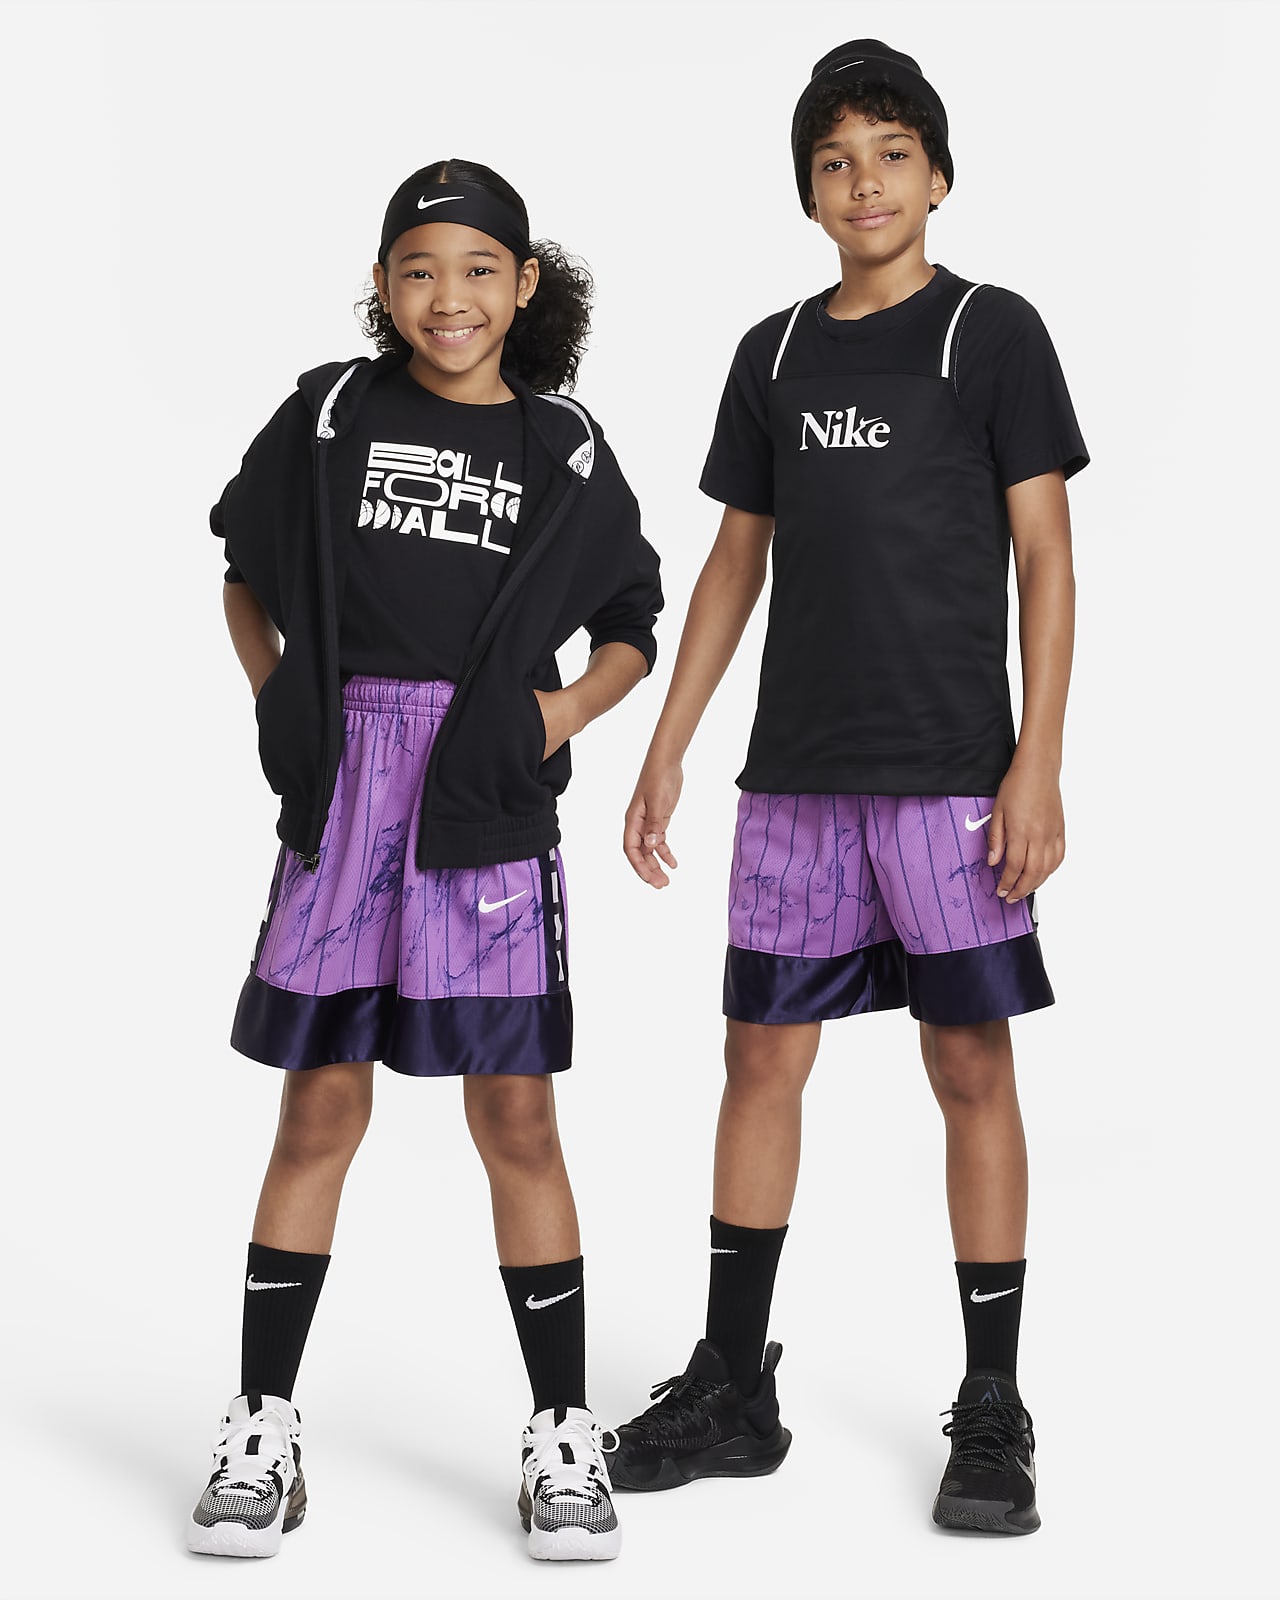 Nike Boys' Dri-FIT Elite Basketball Shorts